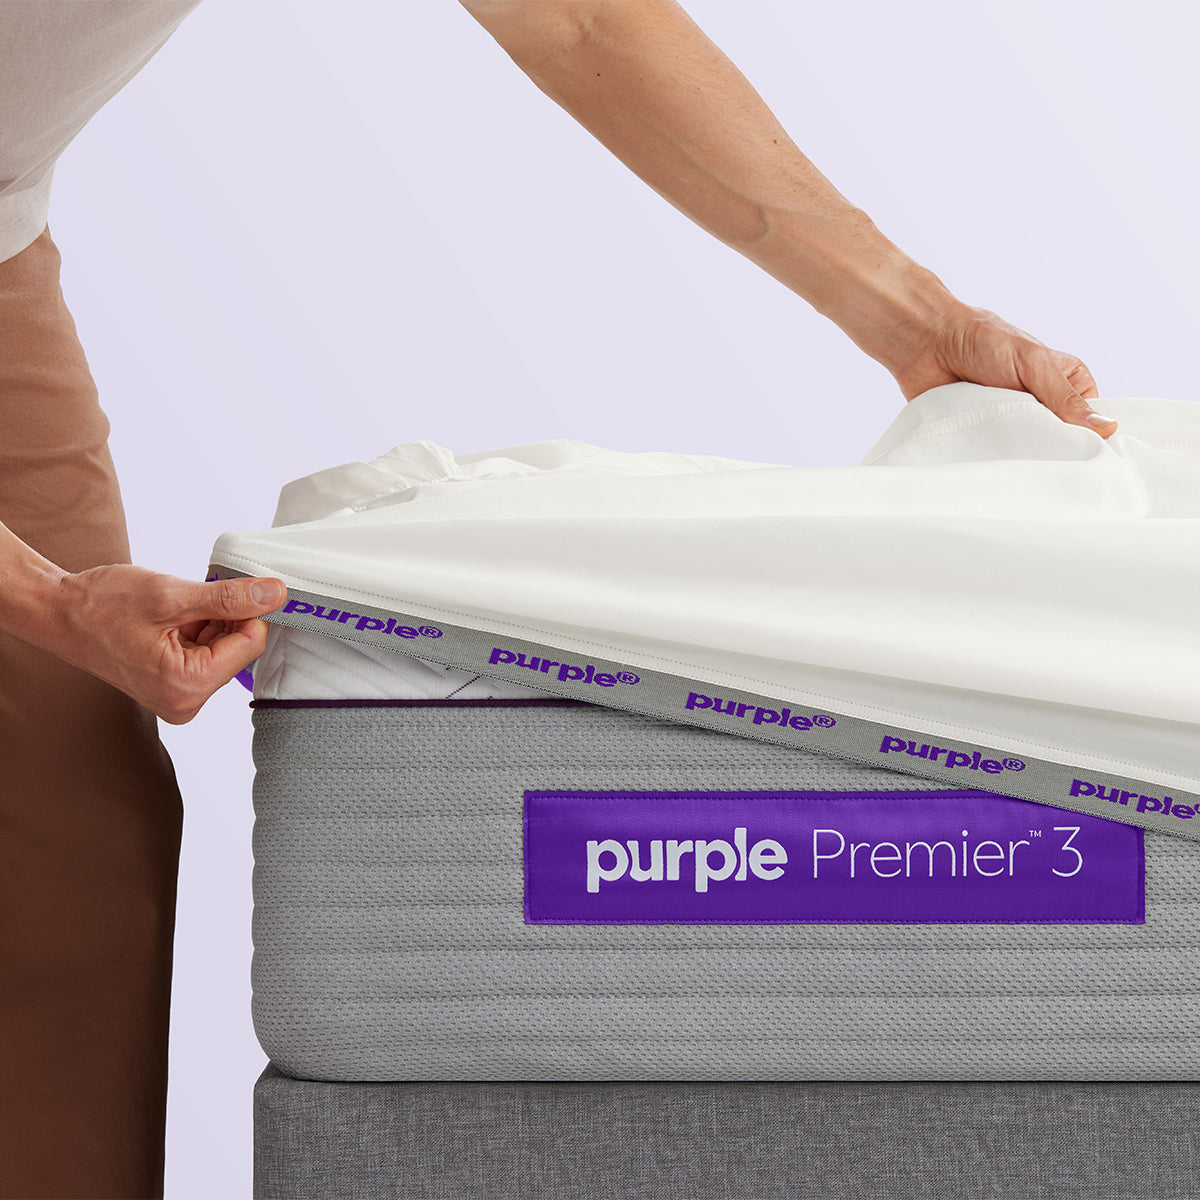 Putting Sheets On The Purple Hybrid Premier 3 Mattress